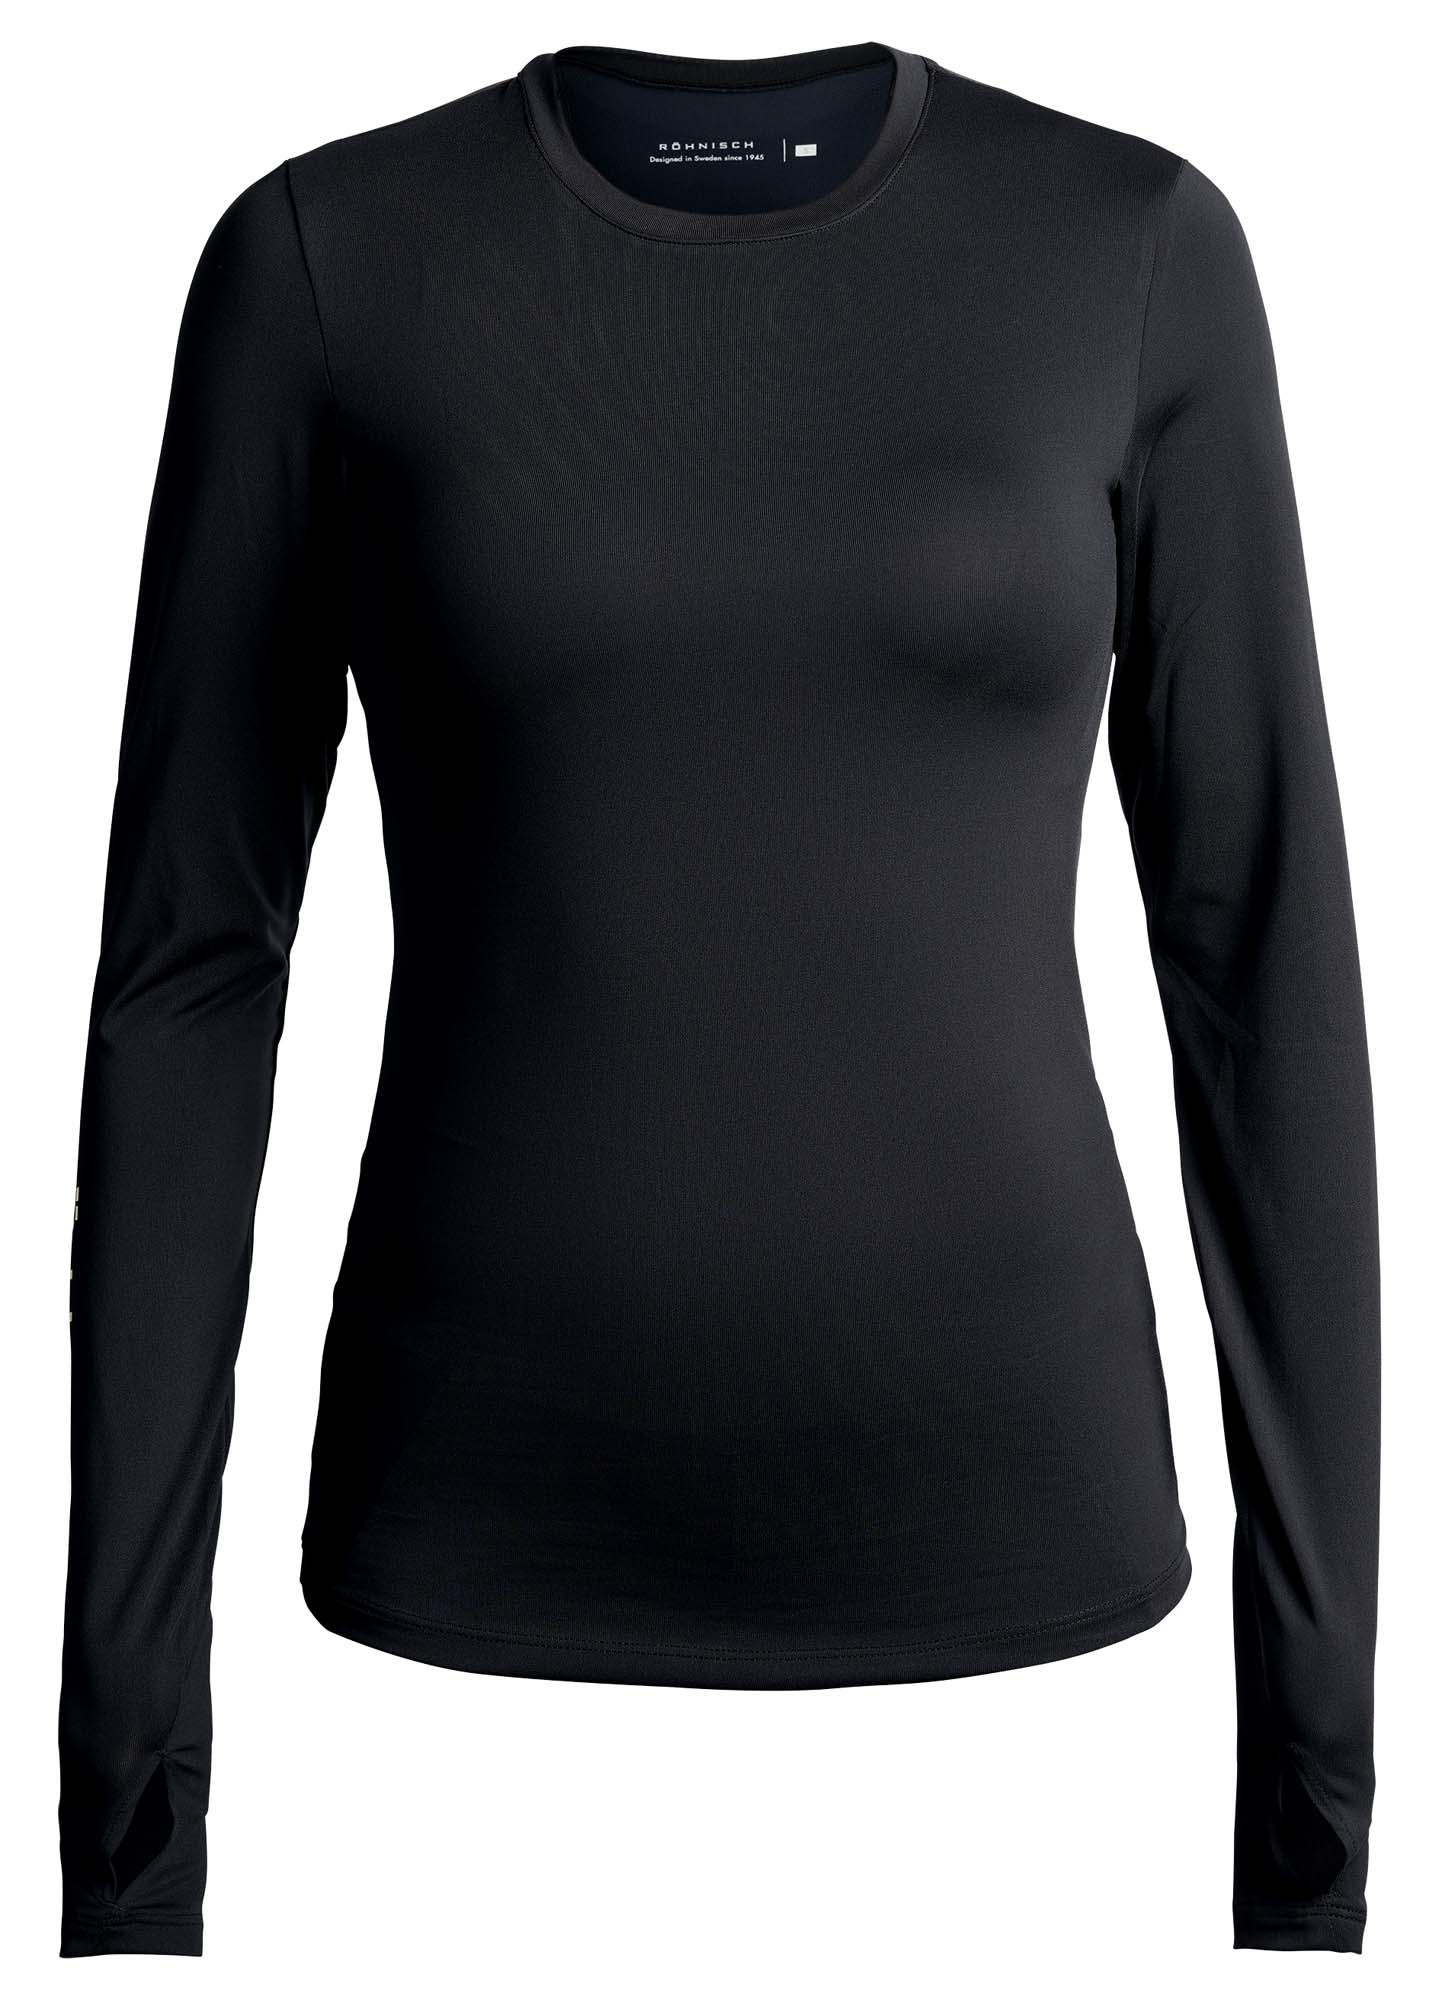 Röhnisch Women’s Team Logo Long Sleeve Black